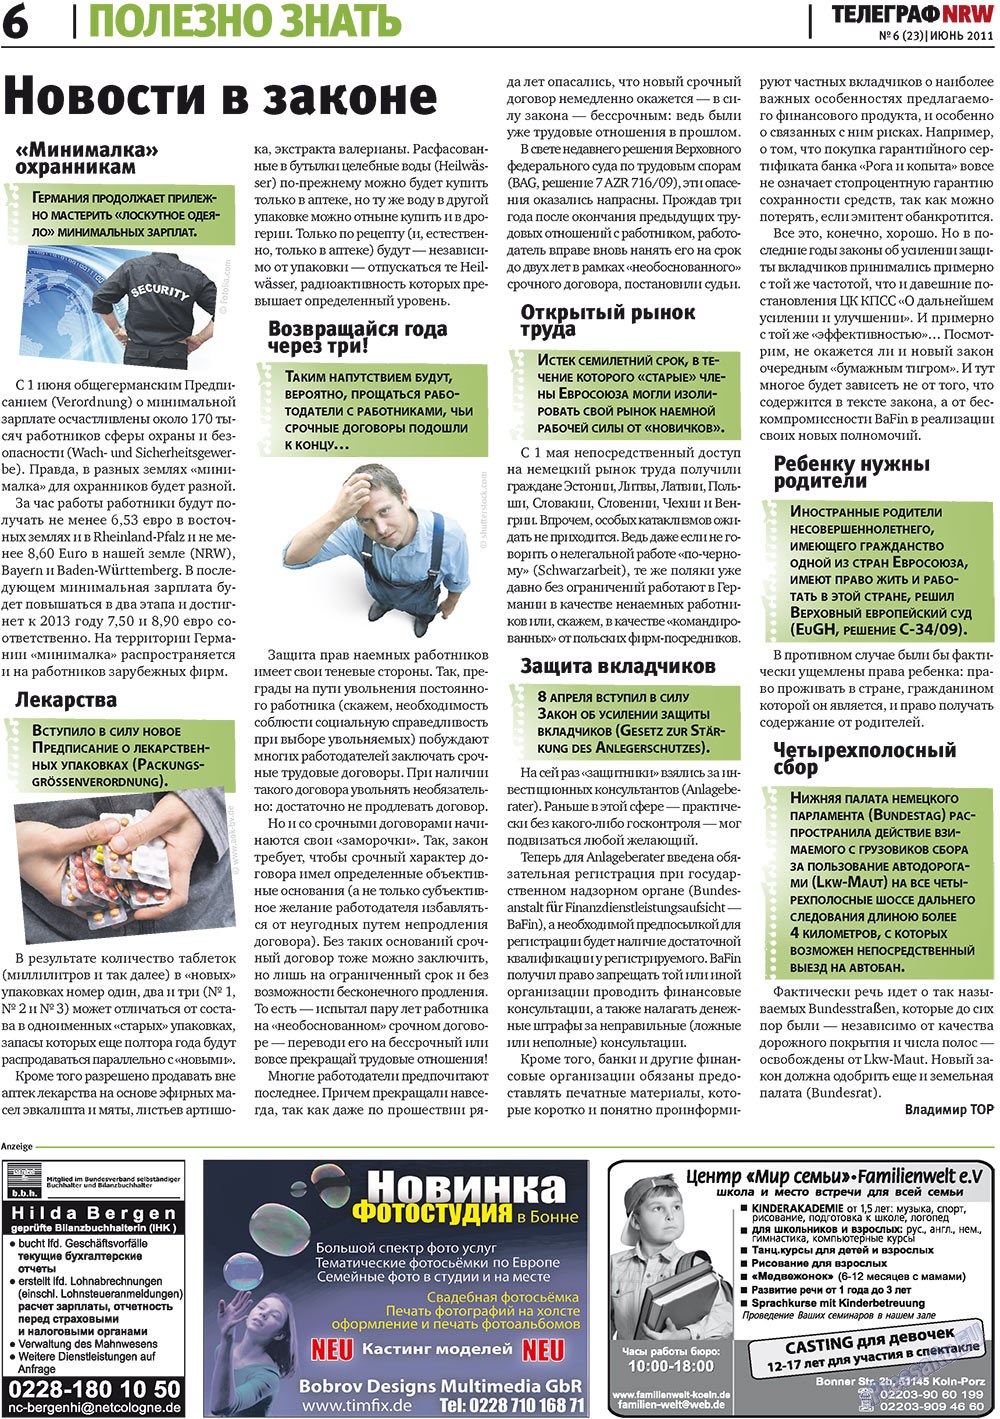 Телеграф NRW, газета. 2011 №6 стр.6